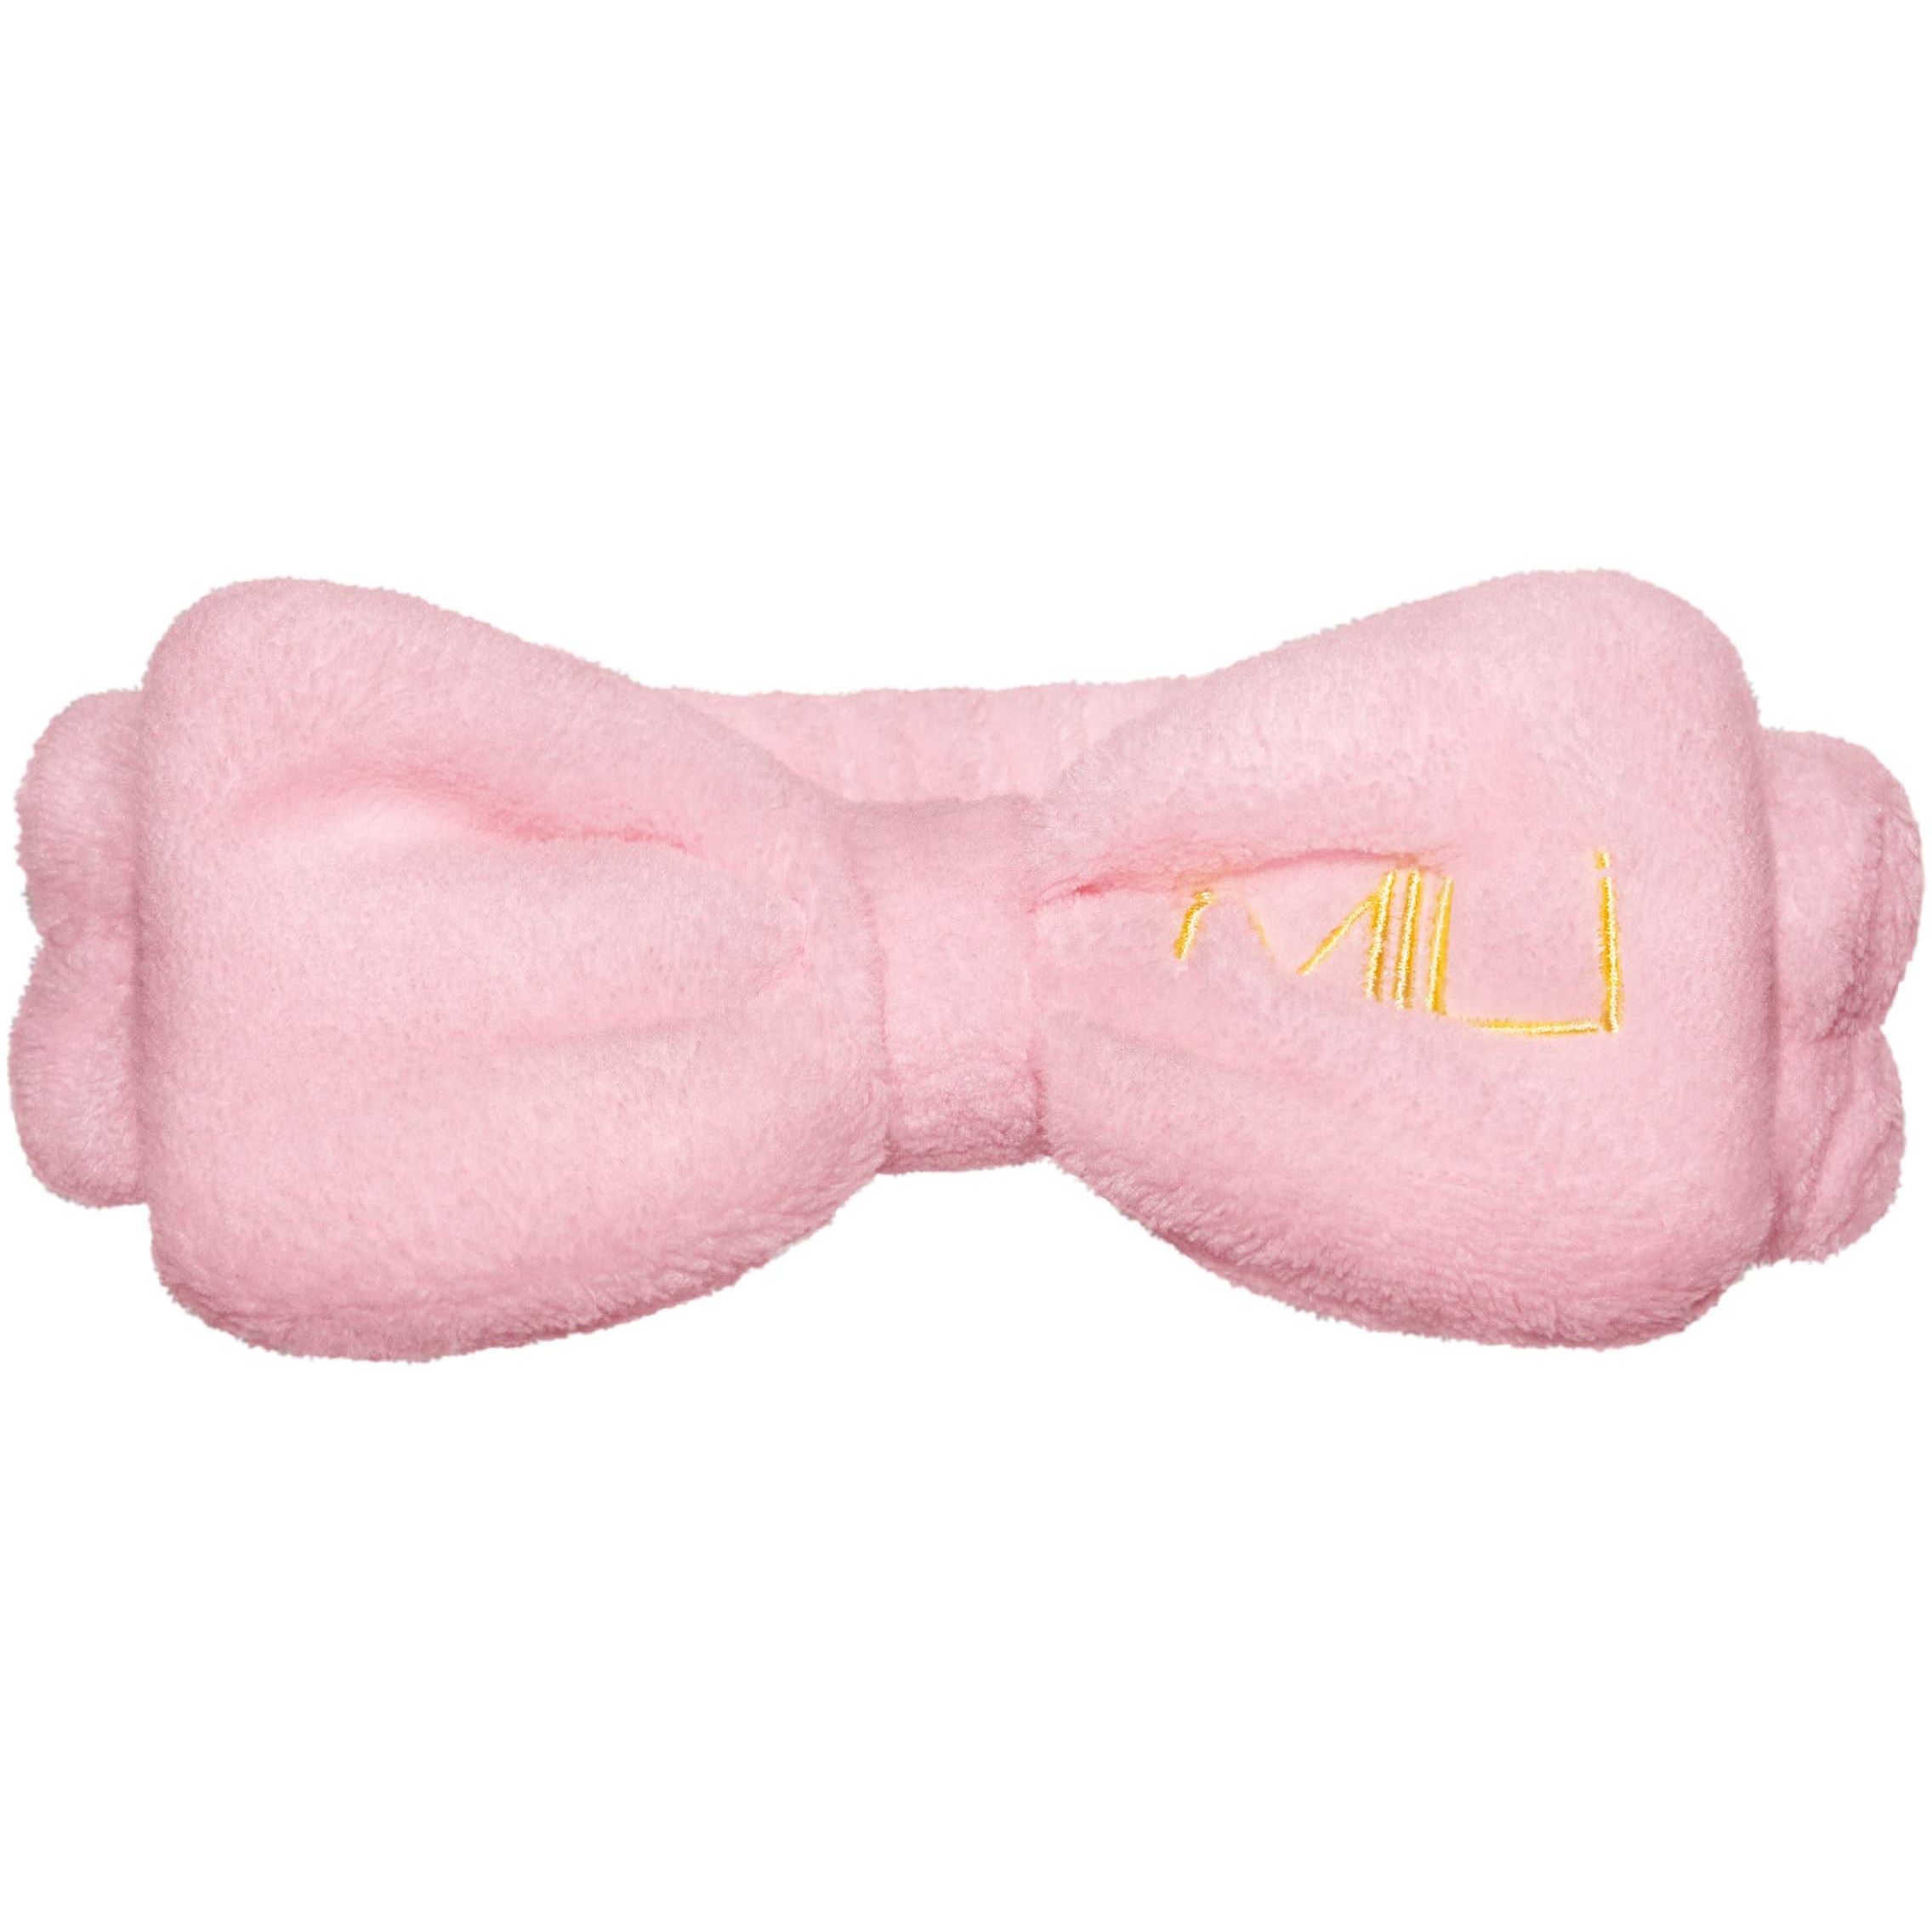 MILI Cosmetics Makeup Bow Band Pink